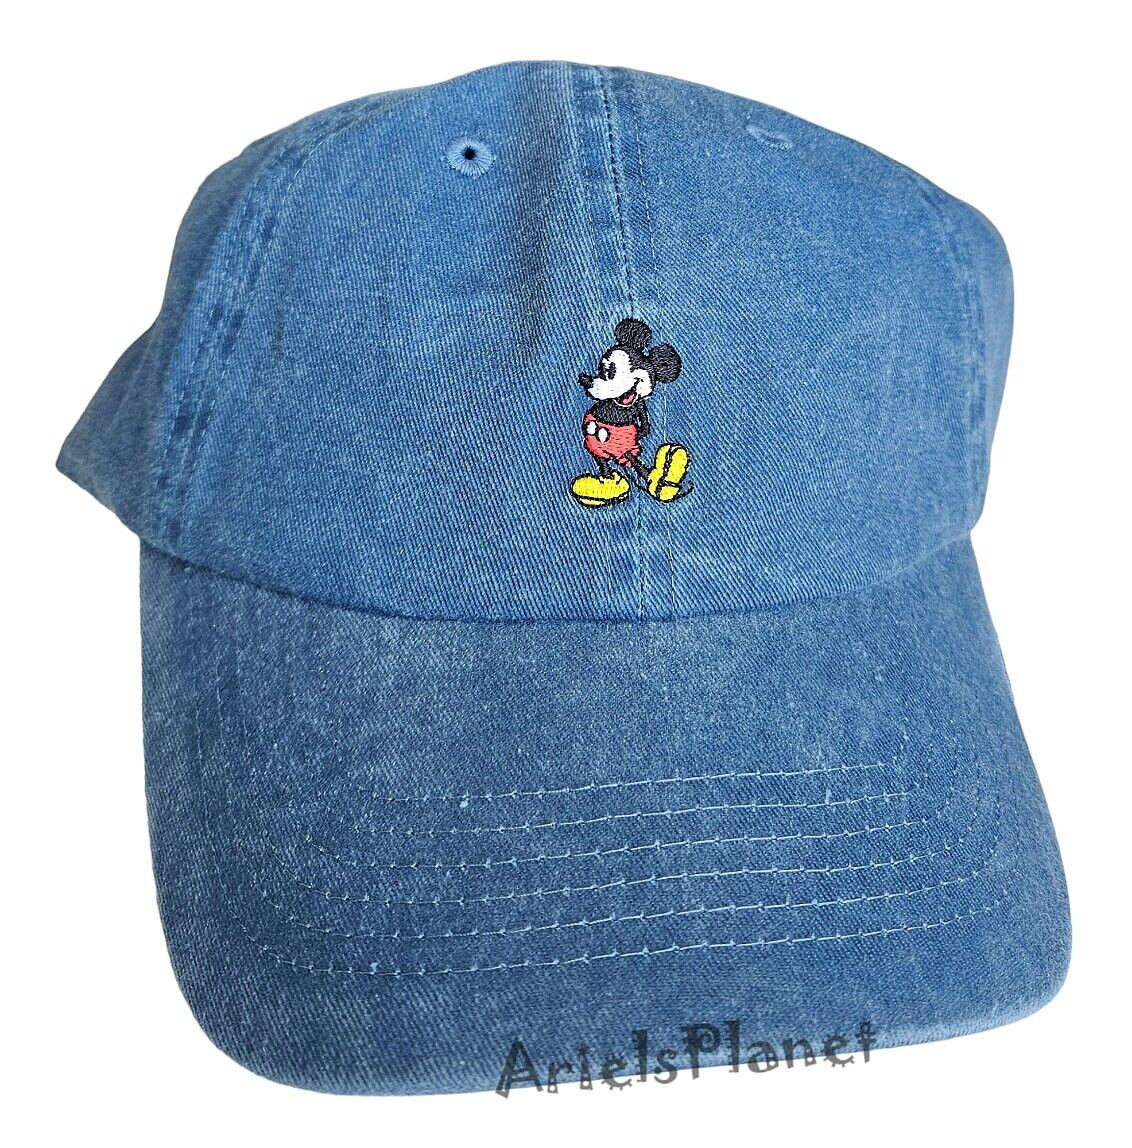 Disney Parks Mickey Mouse Strap Back Blue Denim Embroidered Baseball Hat Cap